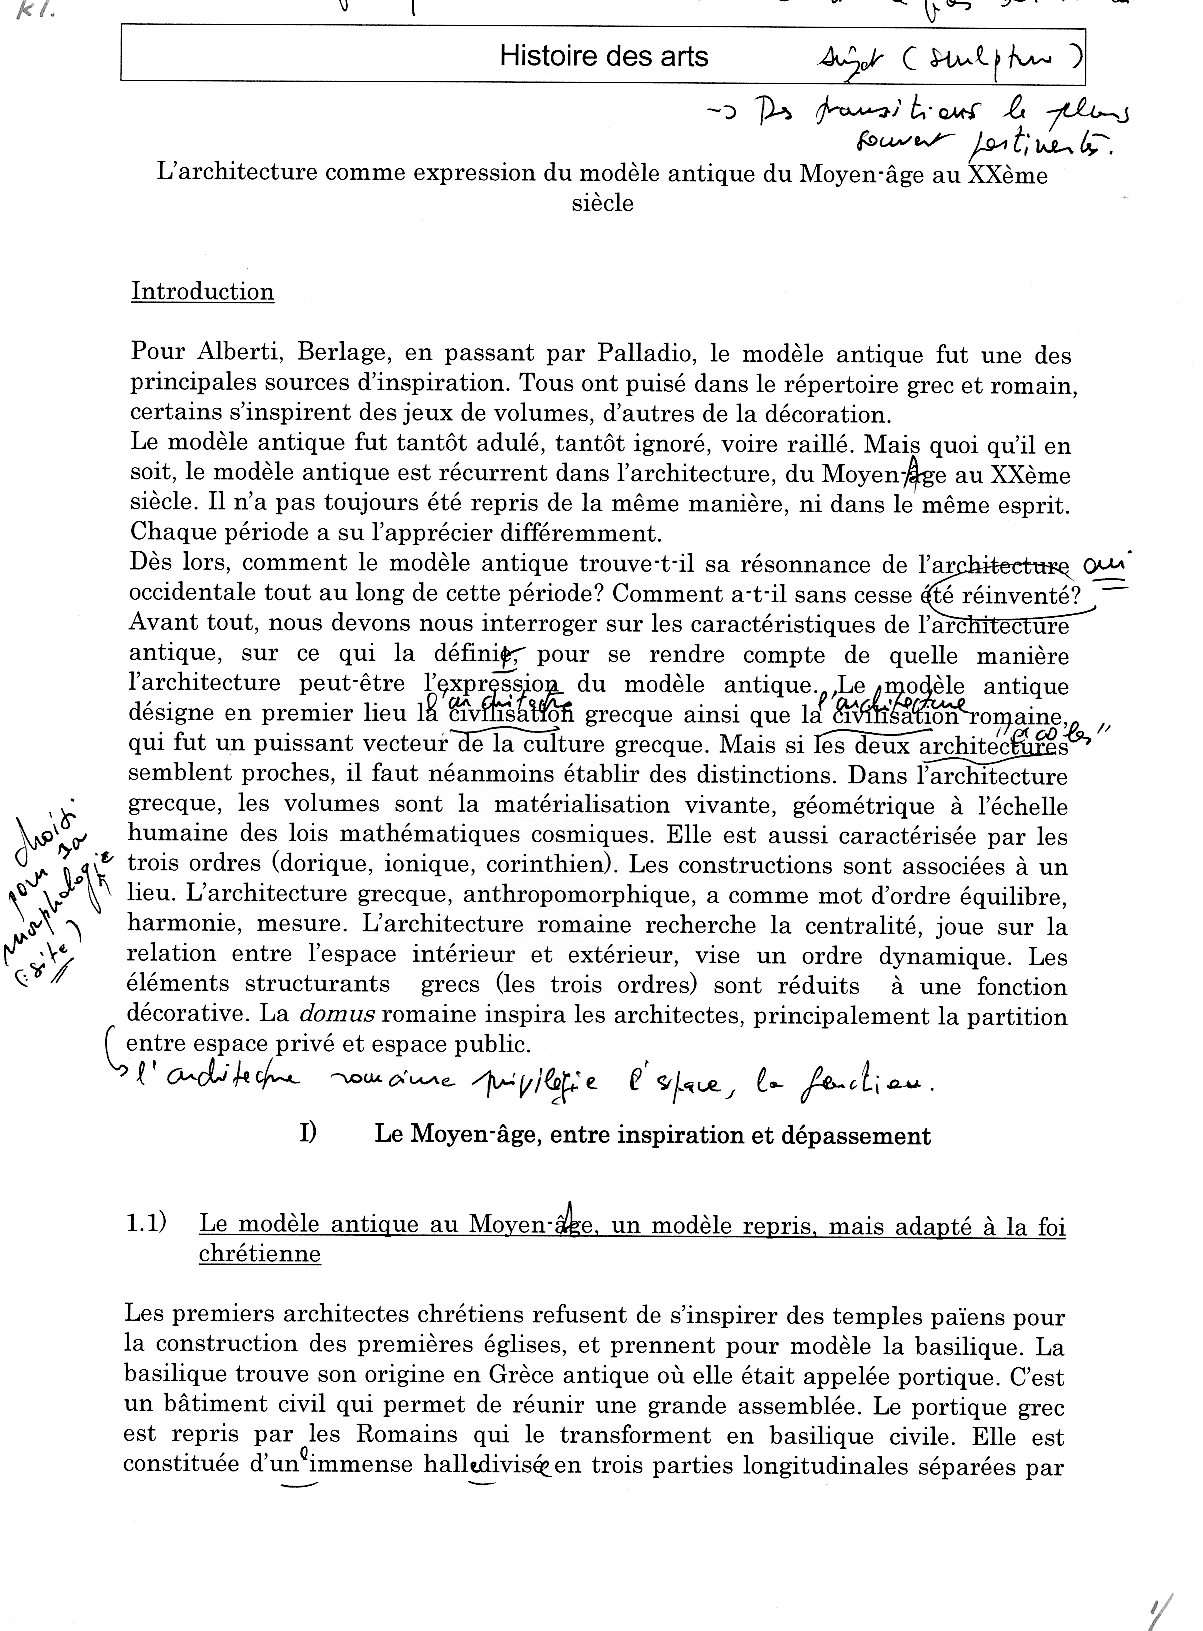 Dissertation binding glasgow caledonian